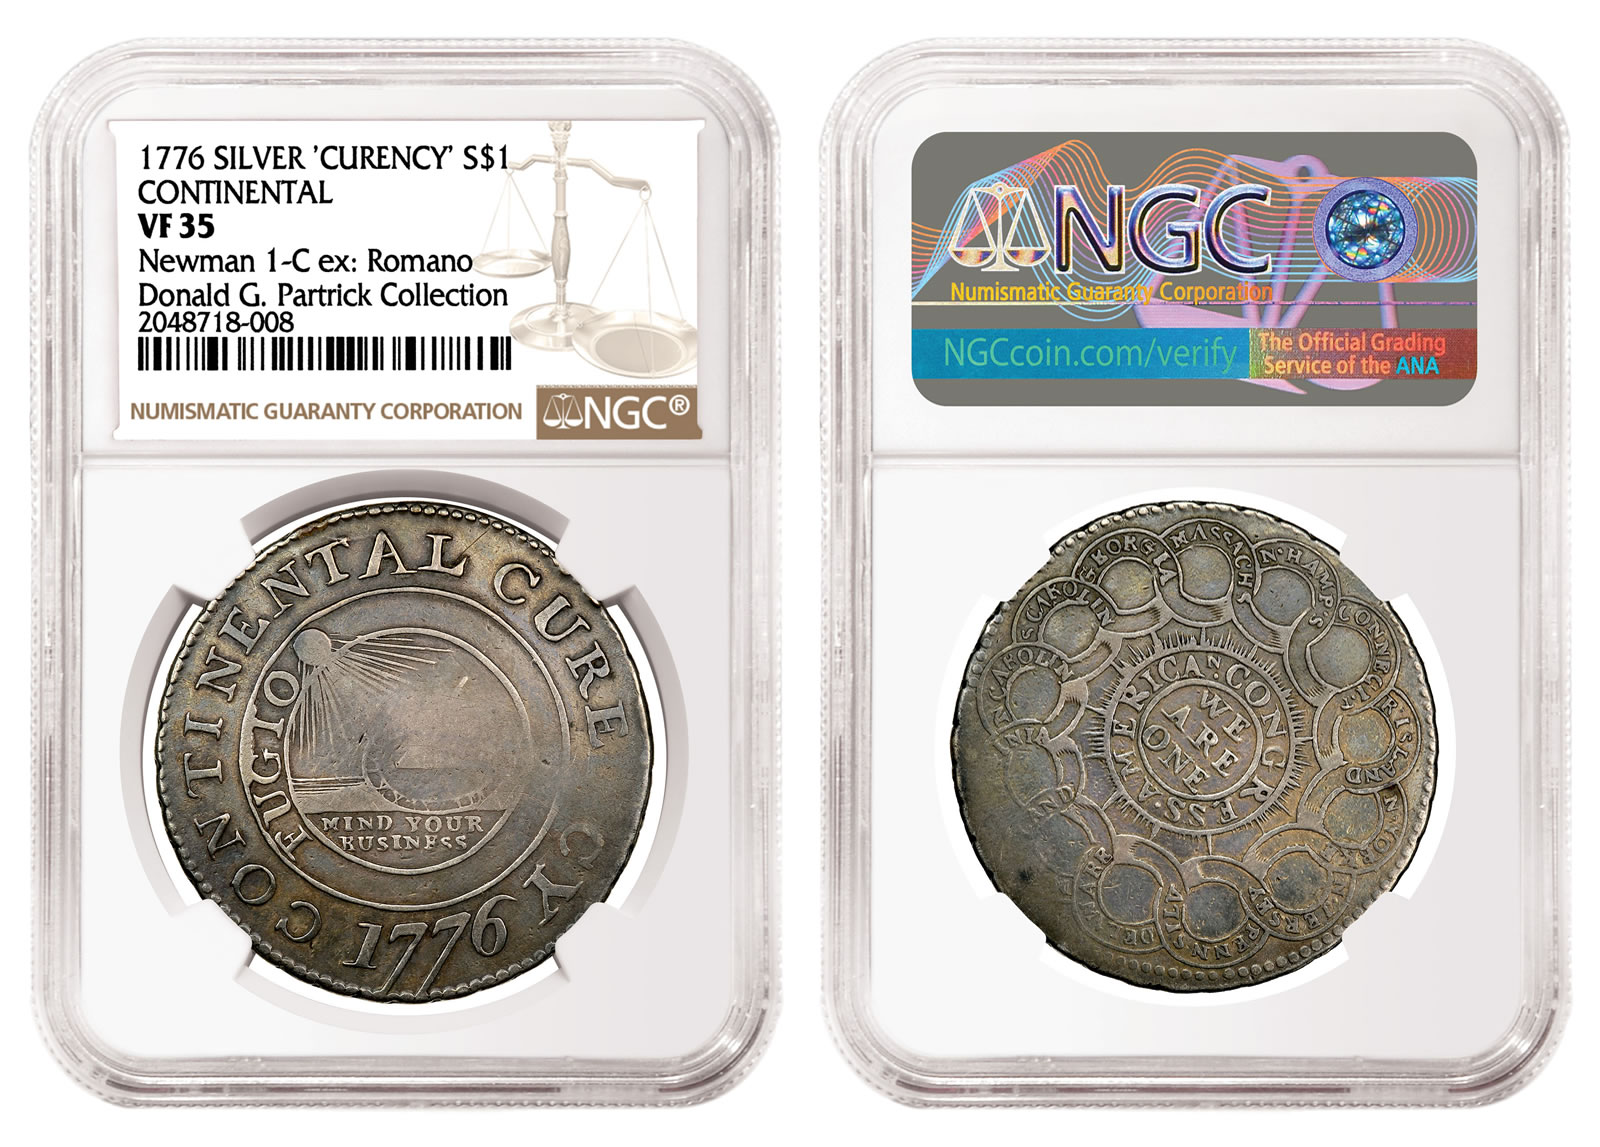 https://www.coinnews.net/wp-content/uploads/2021/04/Silver-1776-Continental-Dollar-graded-NGC-VF-35.jpg